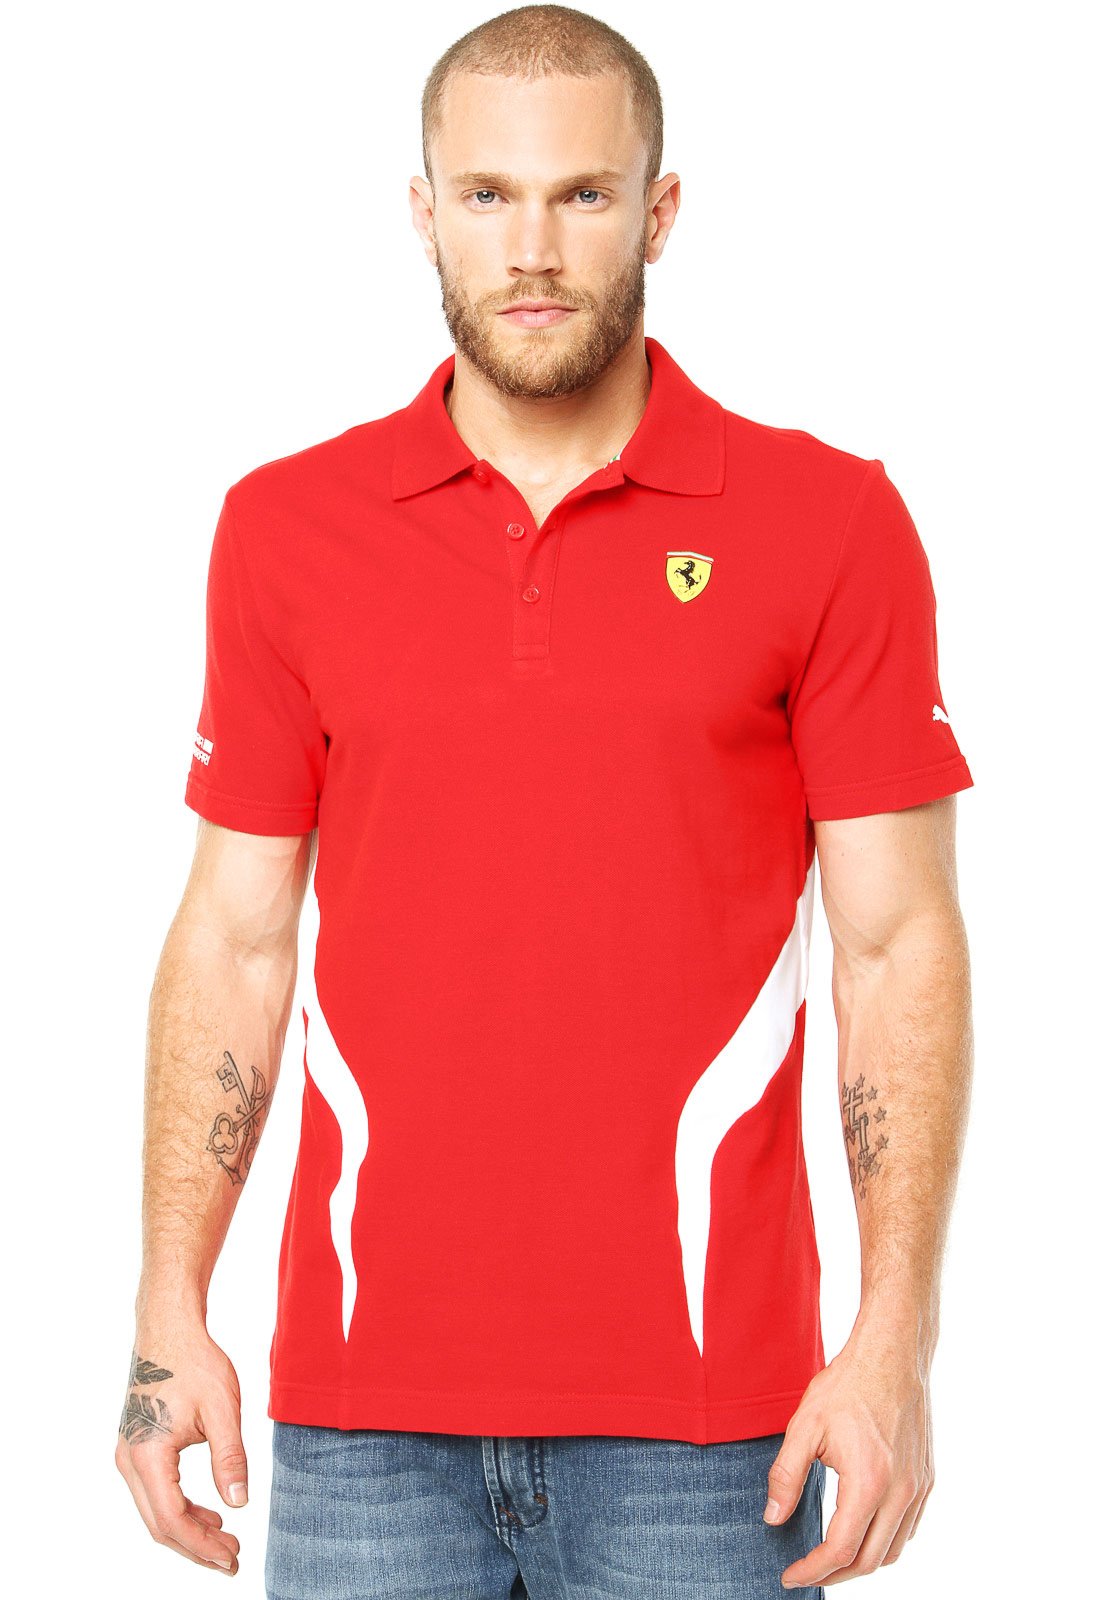 Camiseta Puma Scuderia Ferrari Team Masculina Vermelho